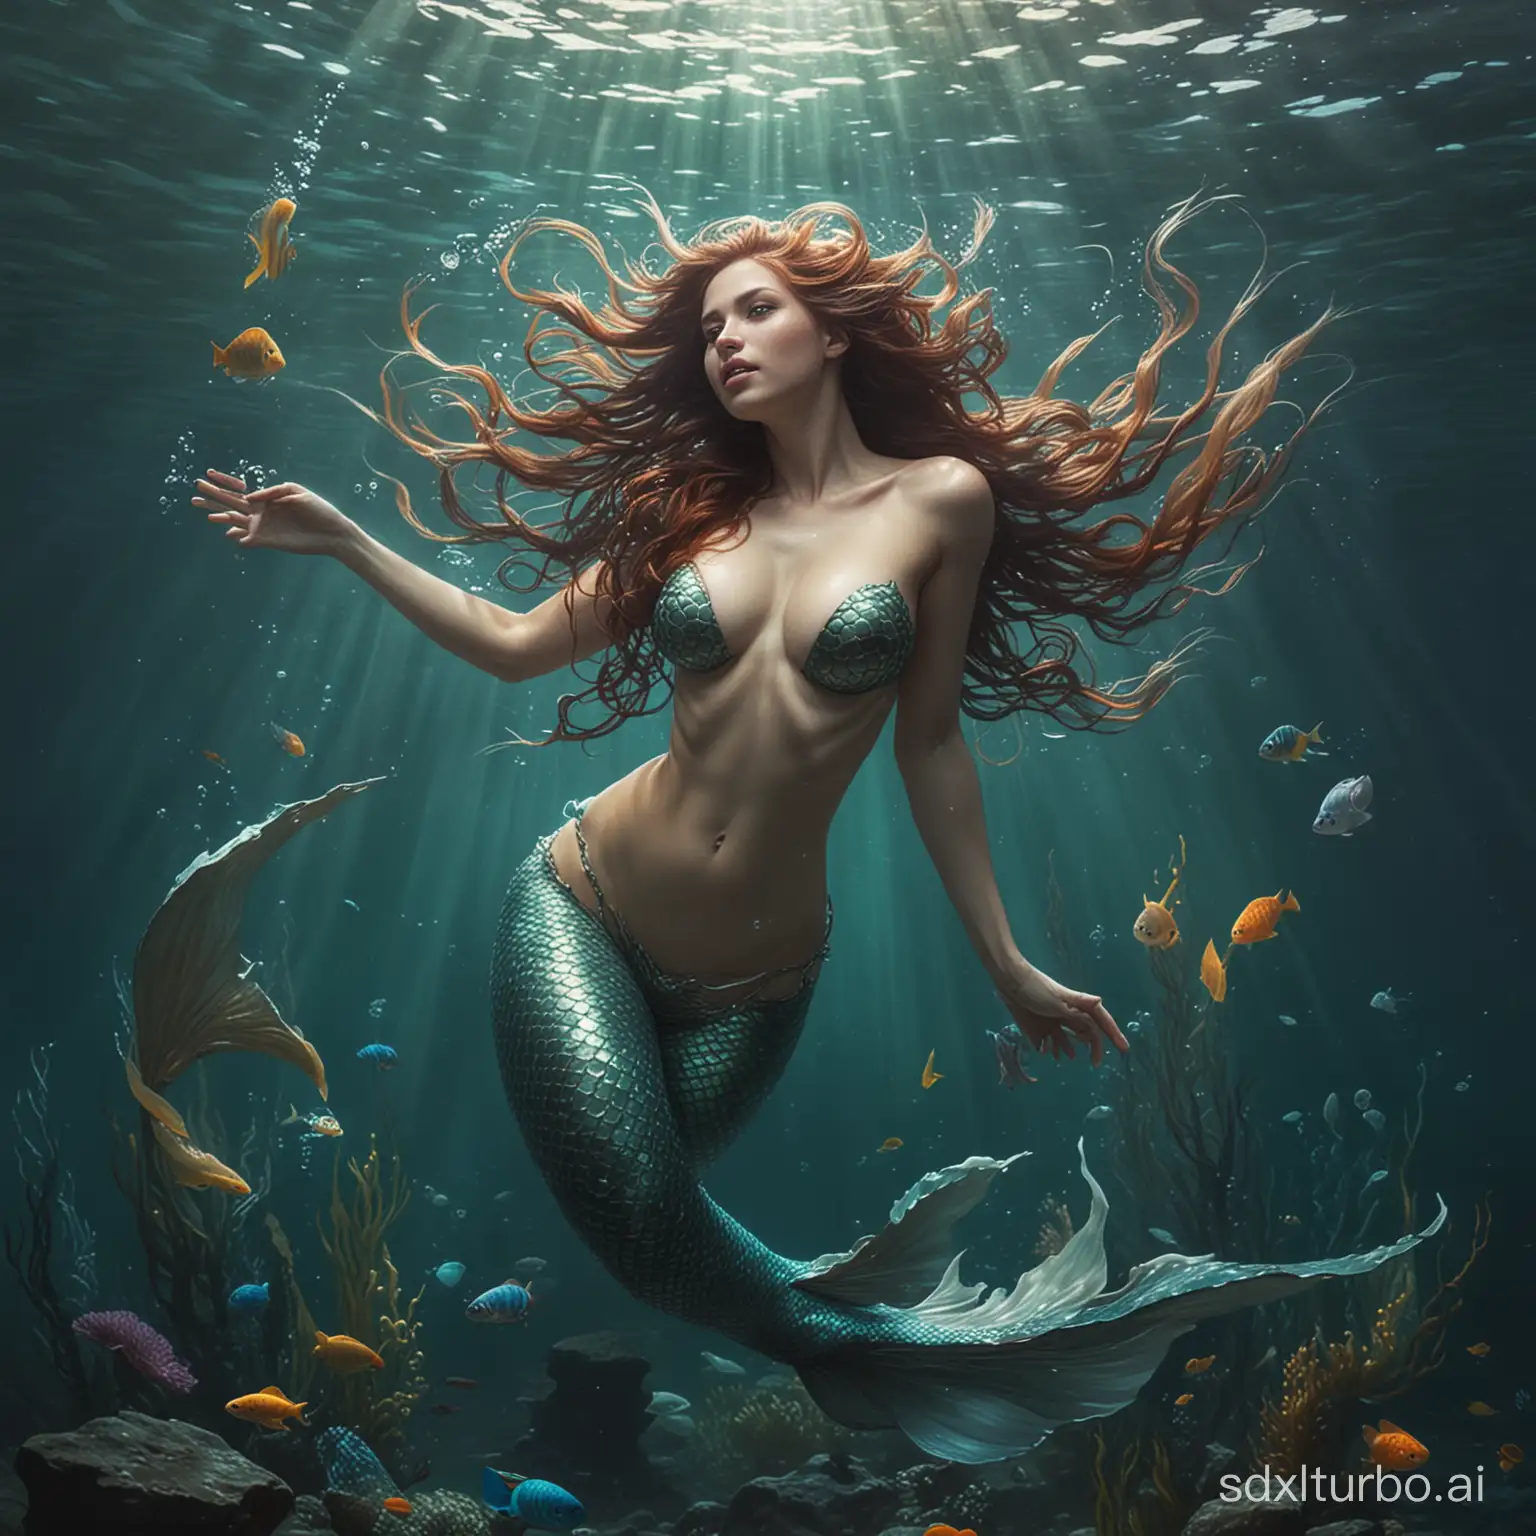 Comedian-Garik-Kharlamov-as-a-Mysterious-Mermaid-in-Oceanic-Ambiance